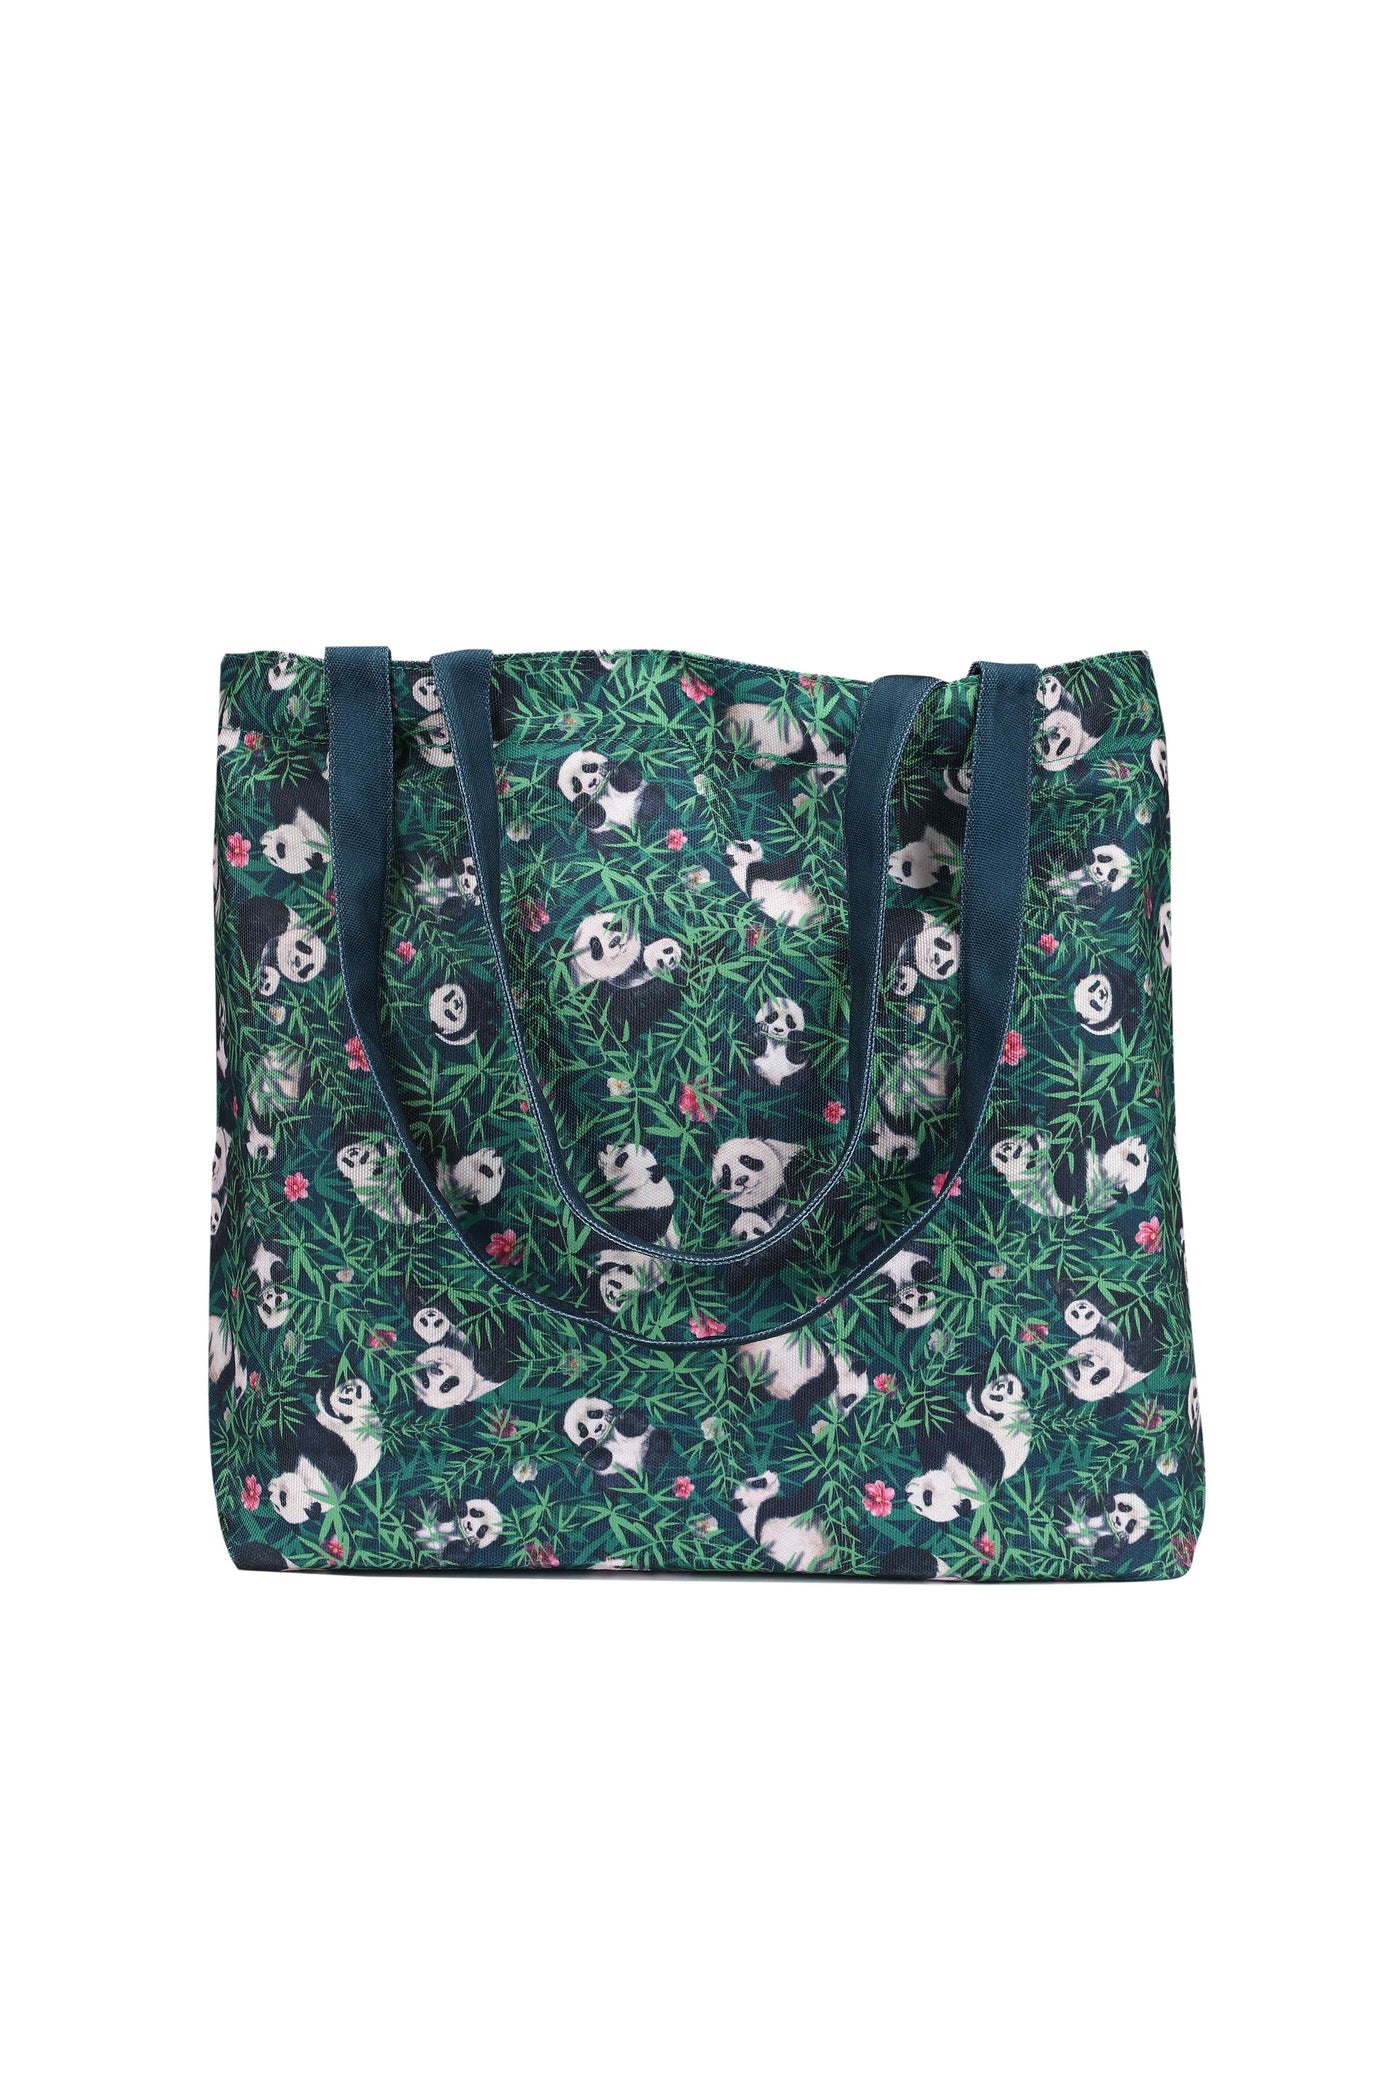 Panda & Bamboo Print Shopping Tote Bag